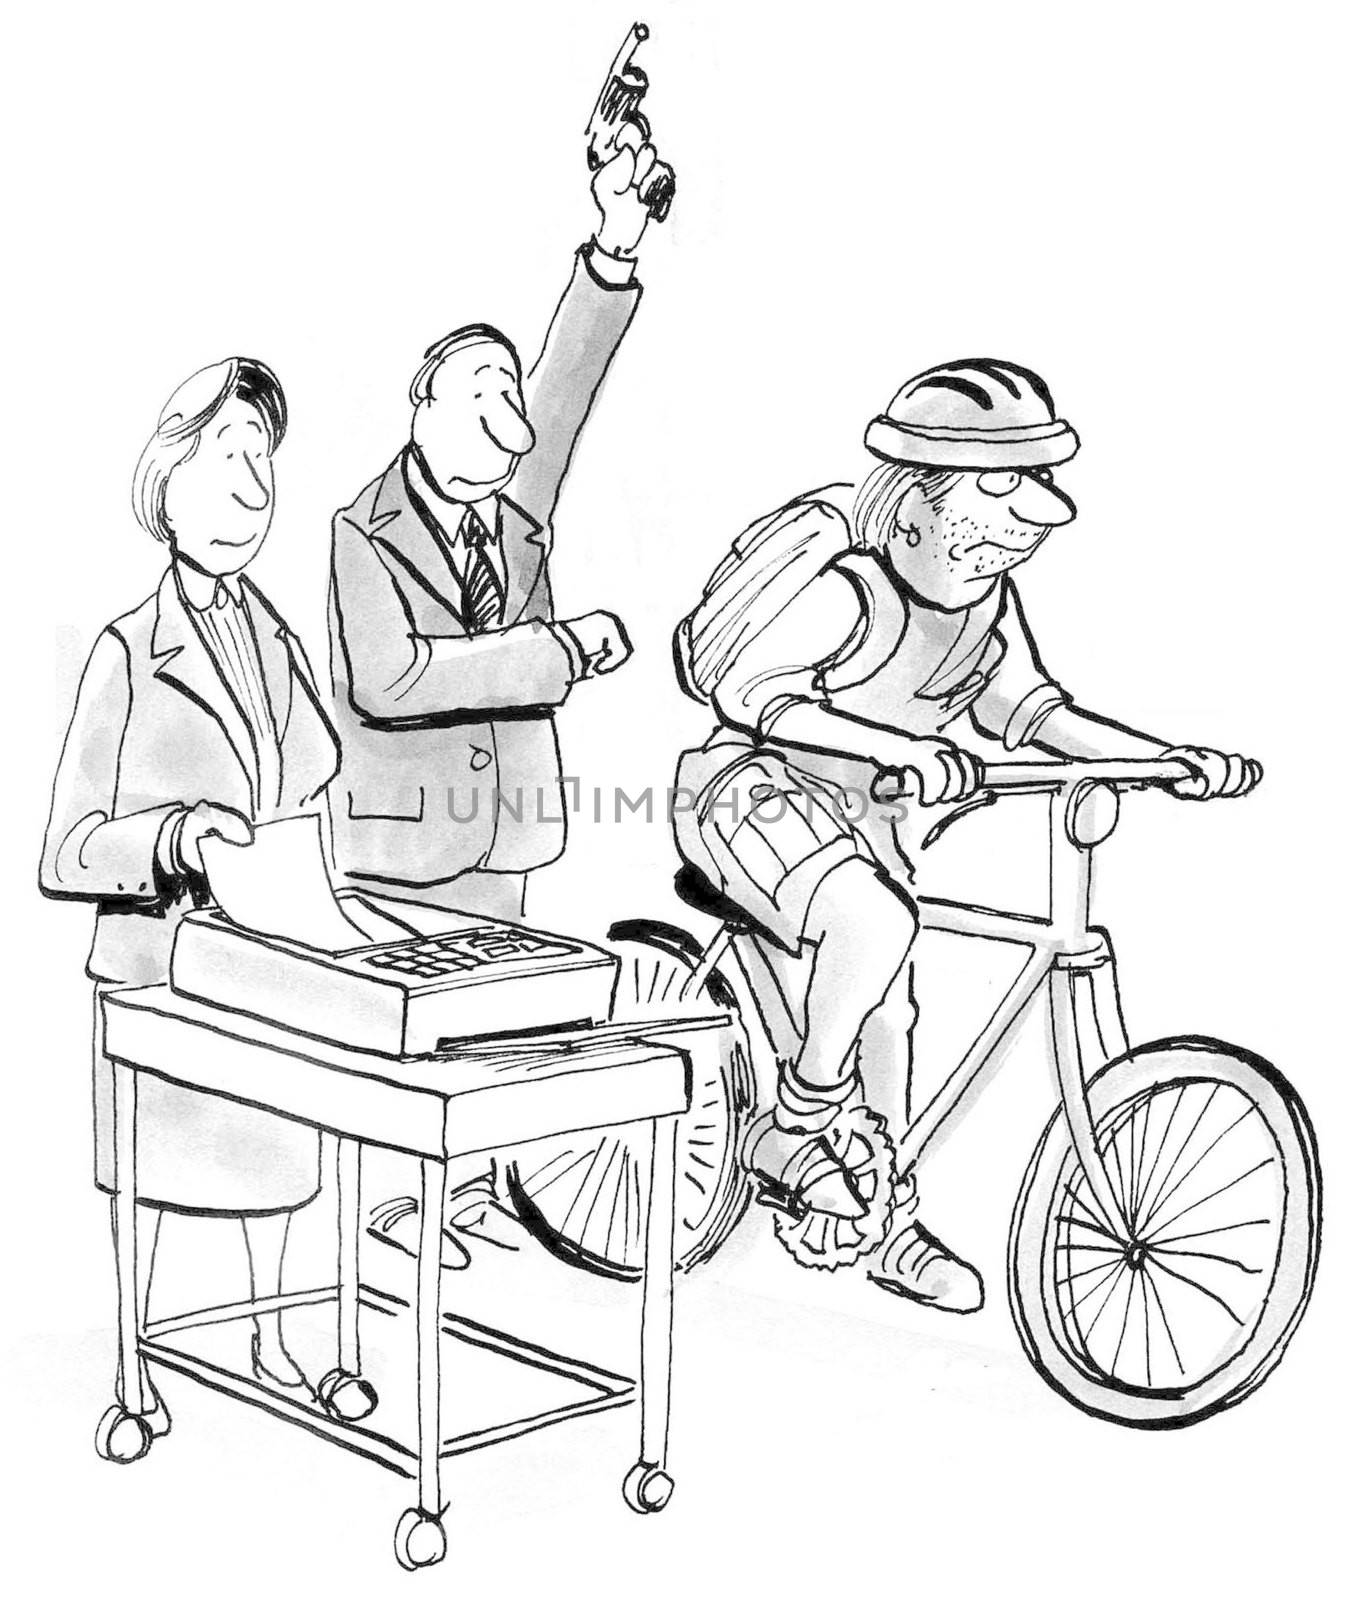 Race between bike messenger and fax machine